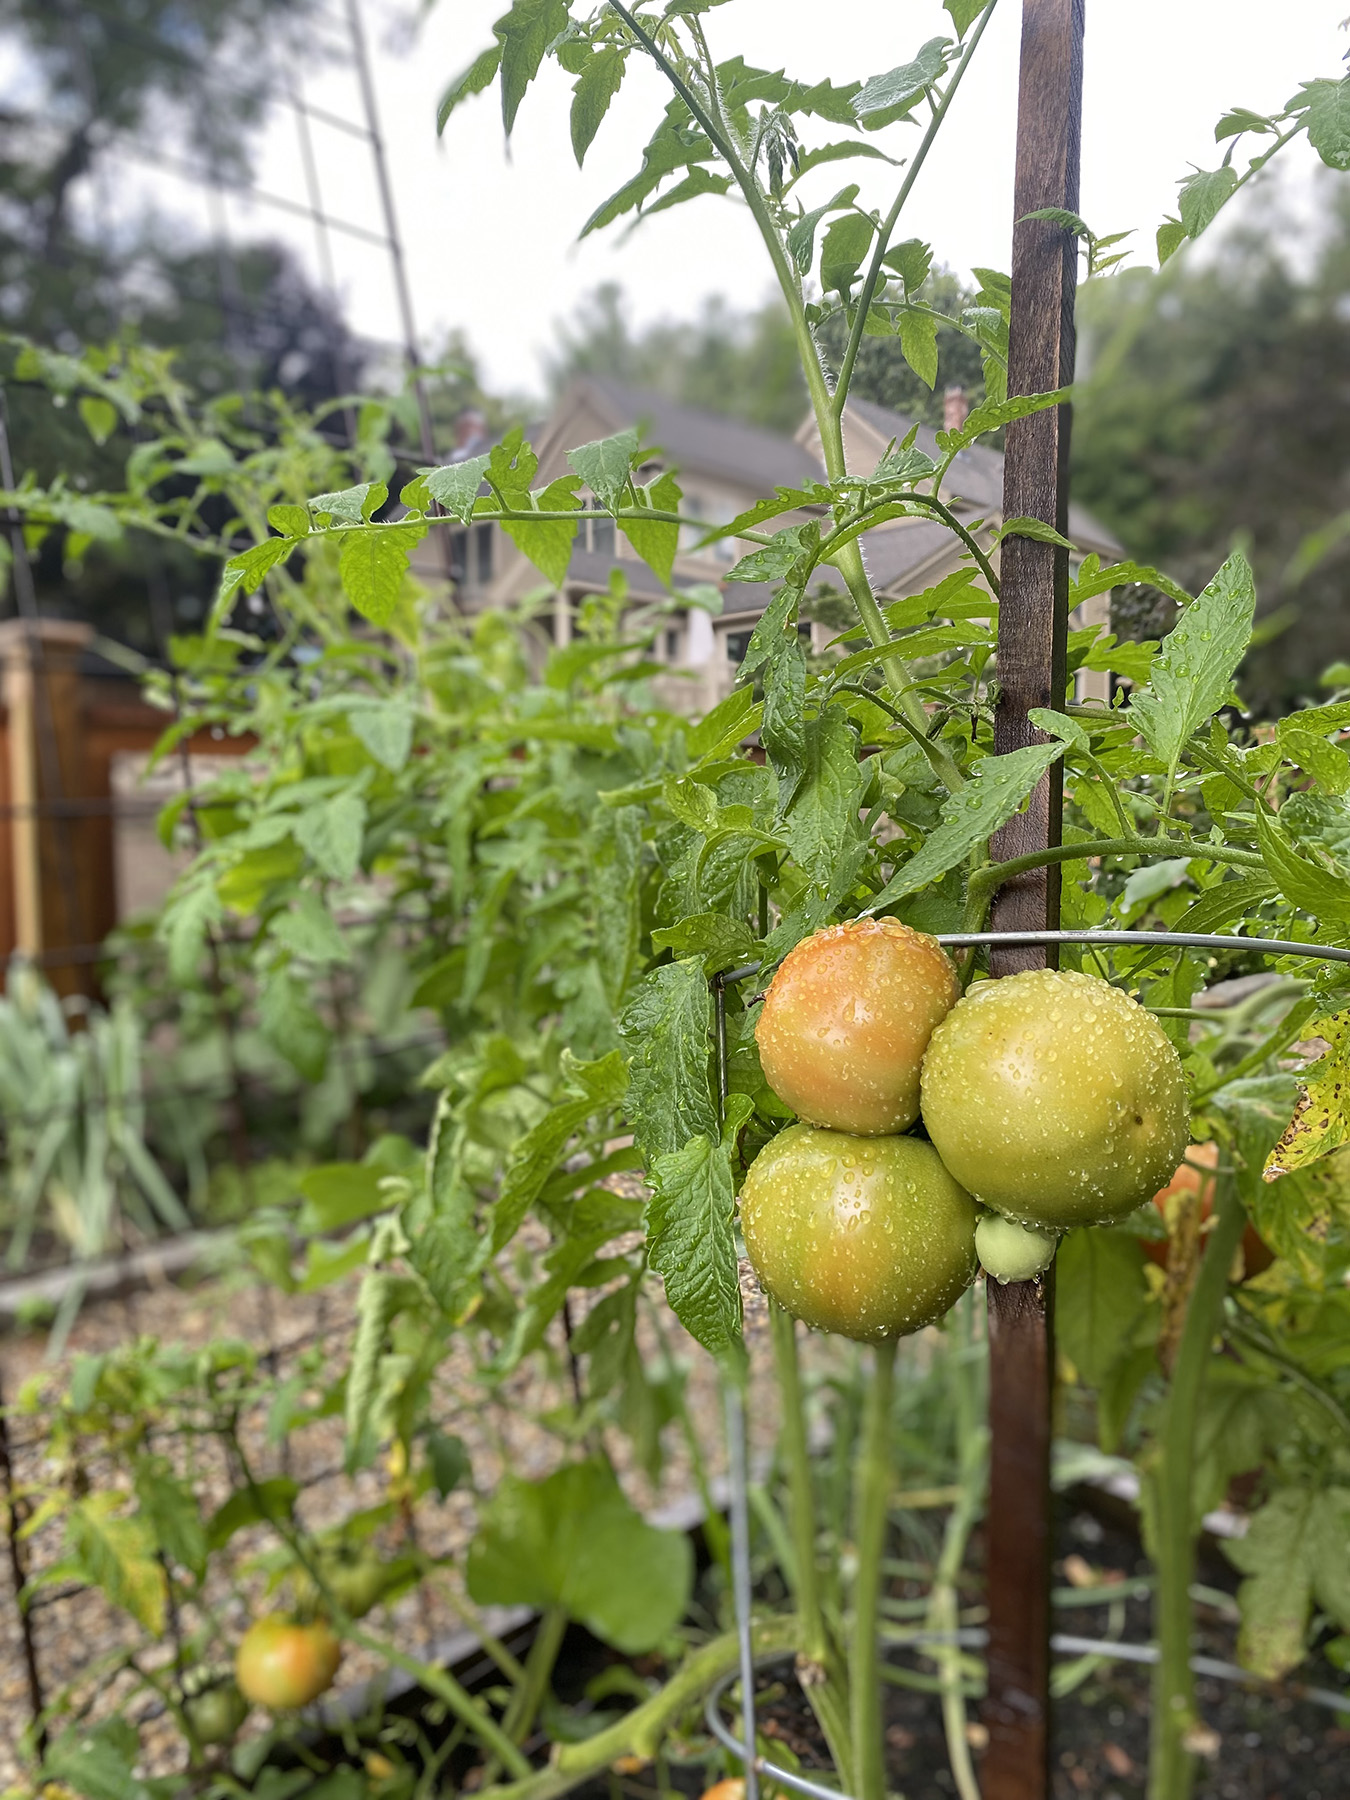 Growing-Tomatoes